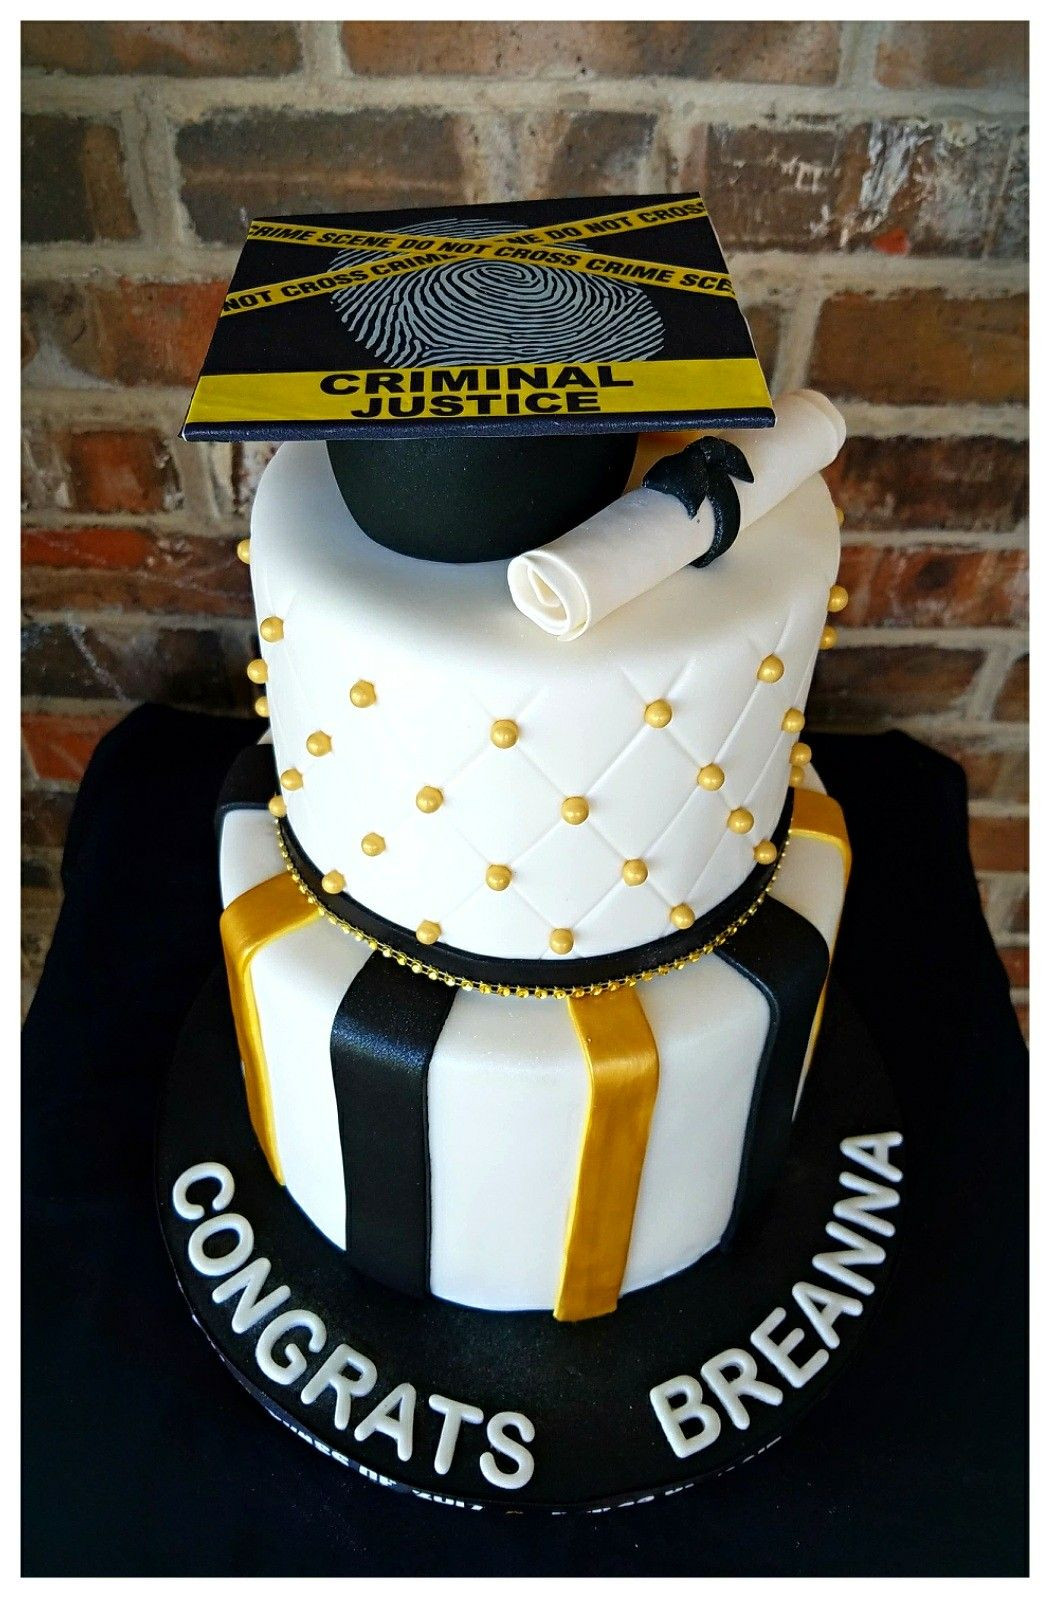 Criminal Justice Graduation Party Ideas
 Criminal justice graduation cake by Max Amor Cakes